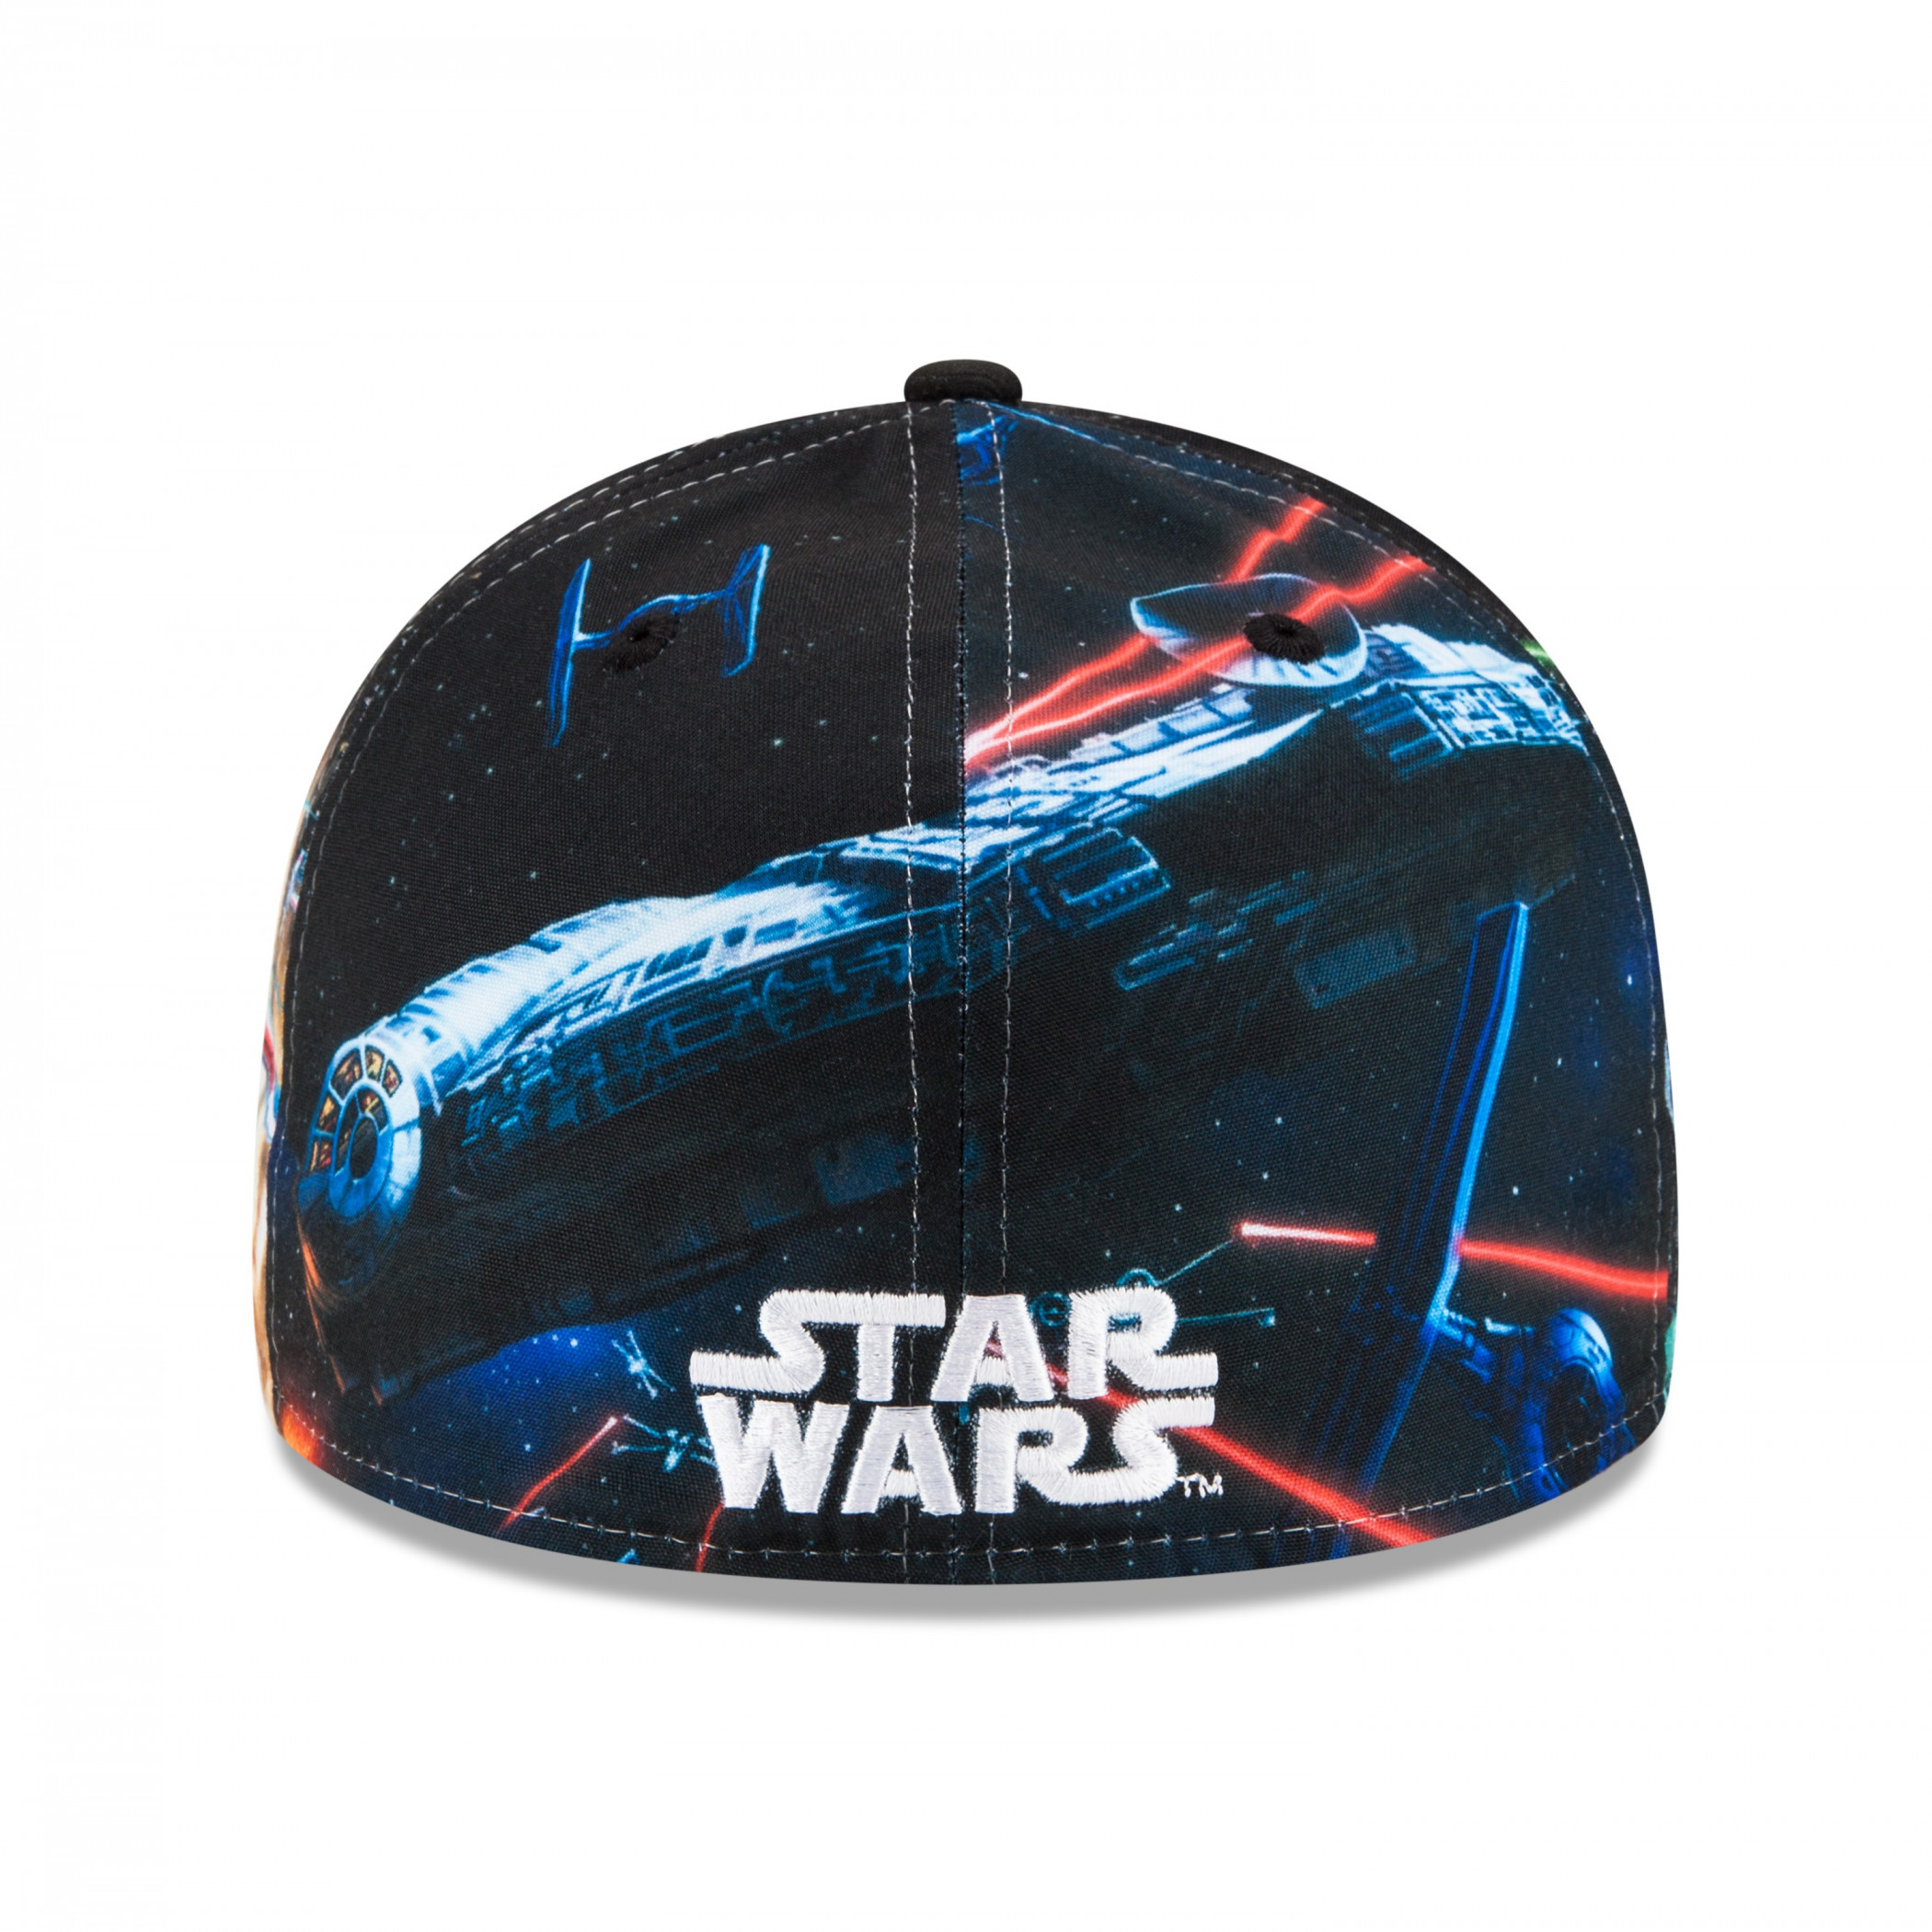 Star Wars Episode 4 Death Star Battle Scene New Era 59Fifty Fitted Hat